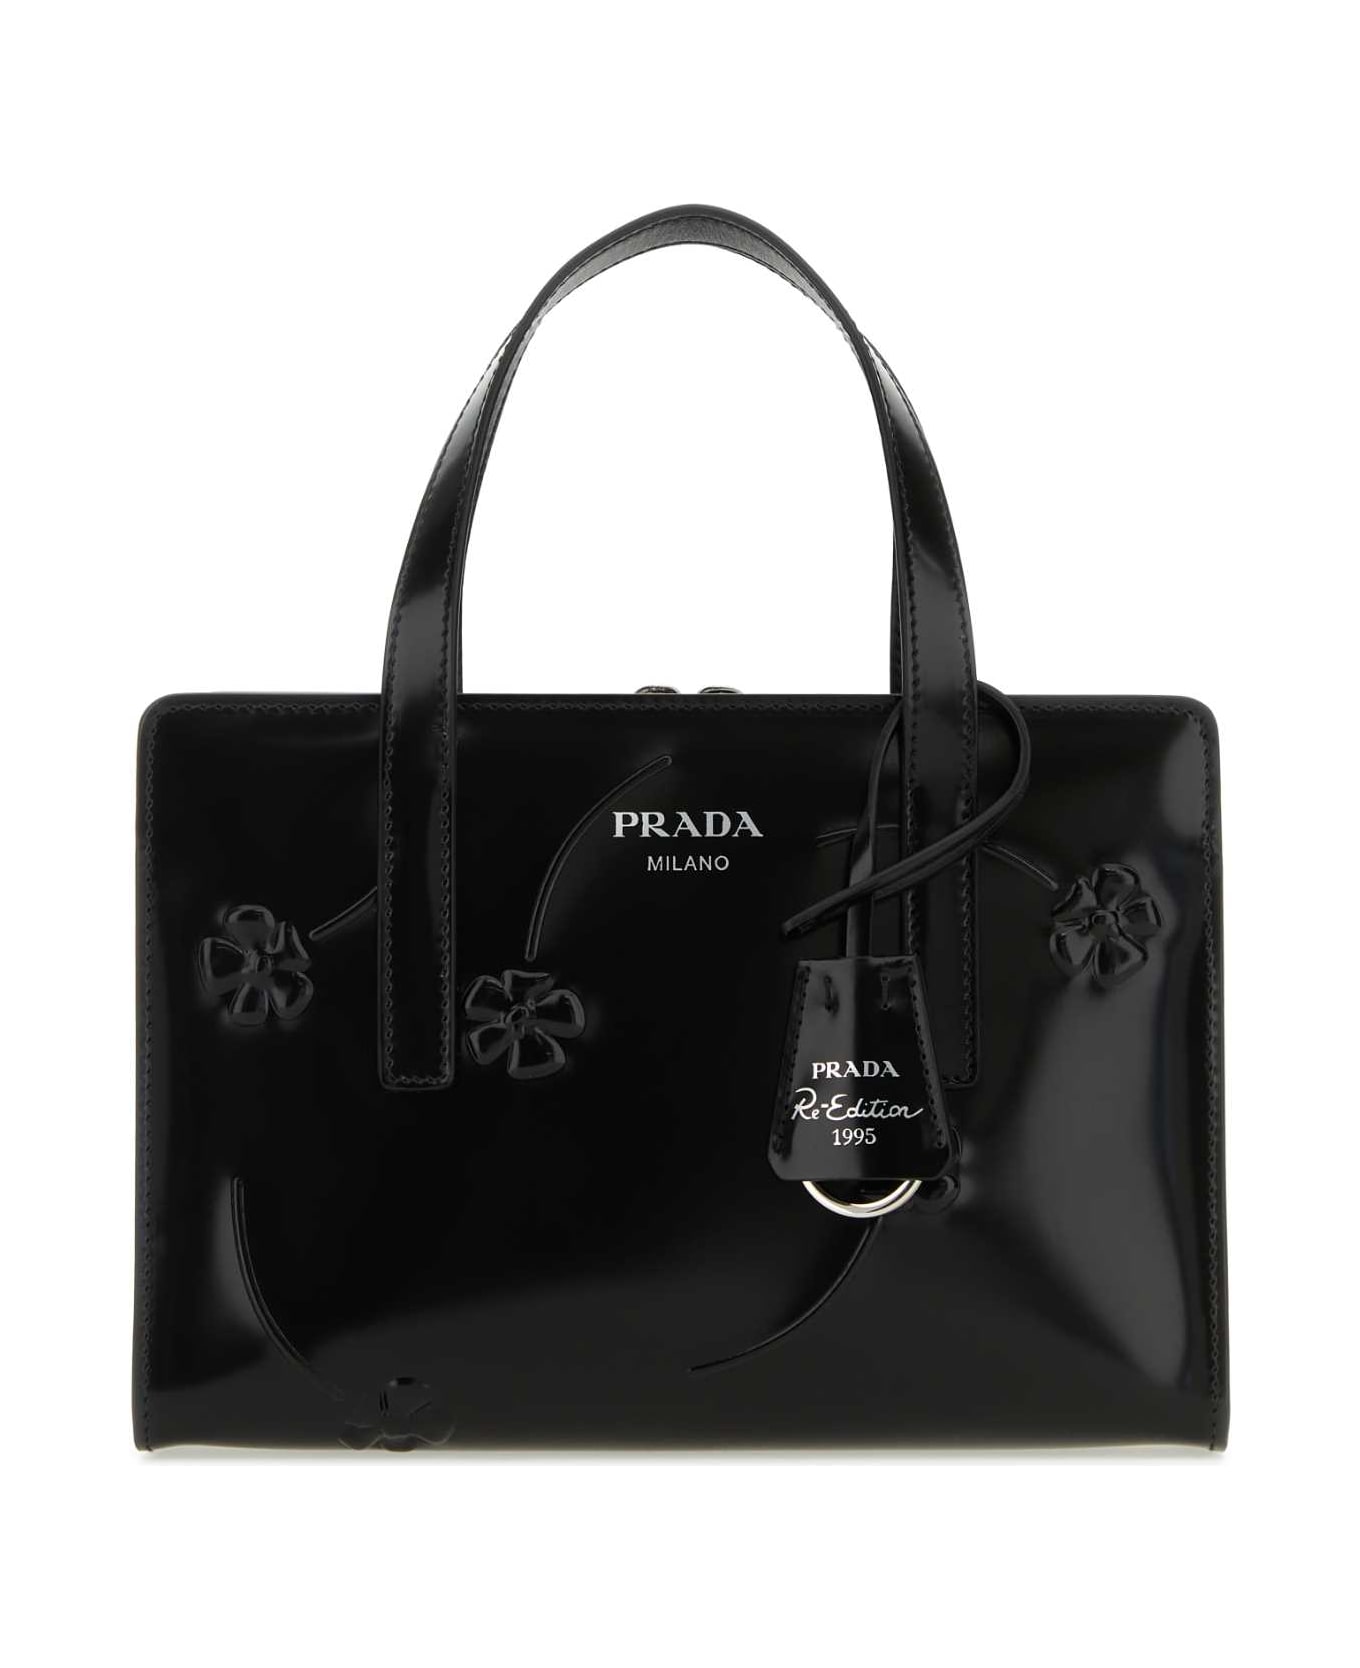 Prada Black Leather Re-edition 1995 Handbag - Black